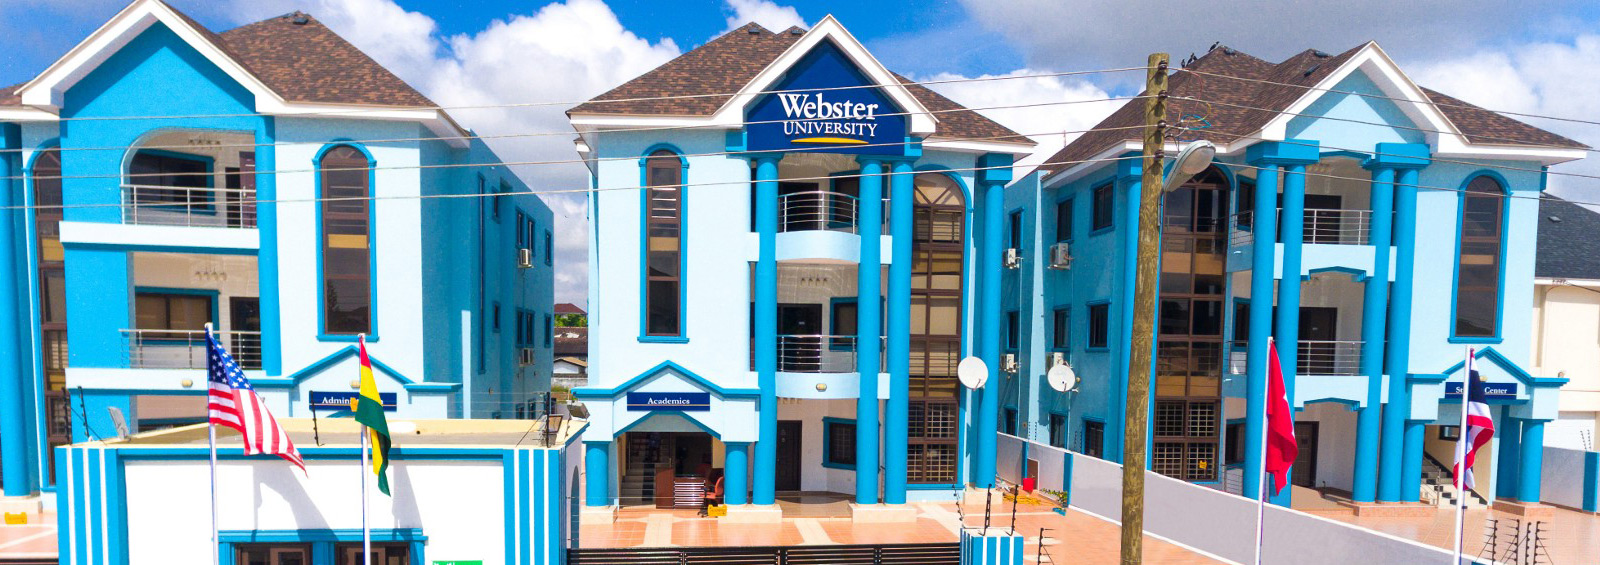 Wesbter University Ghana to host premiere career fair